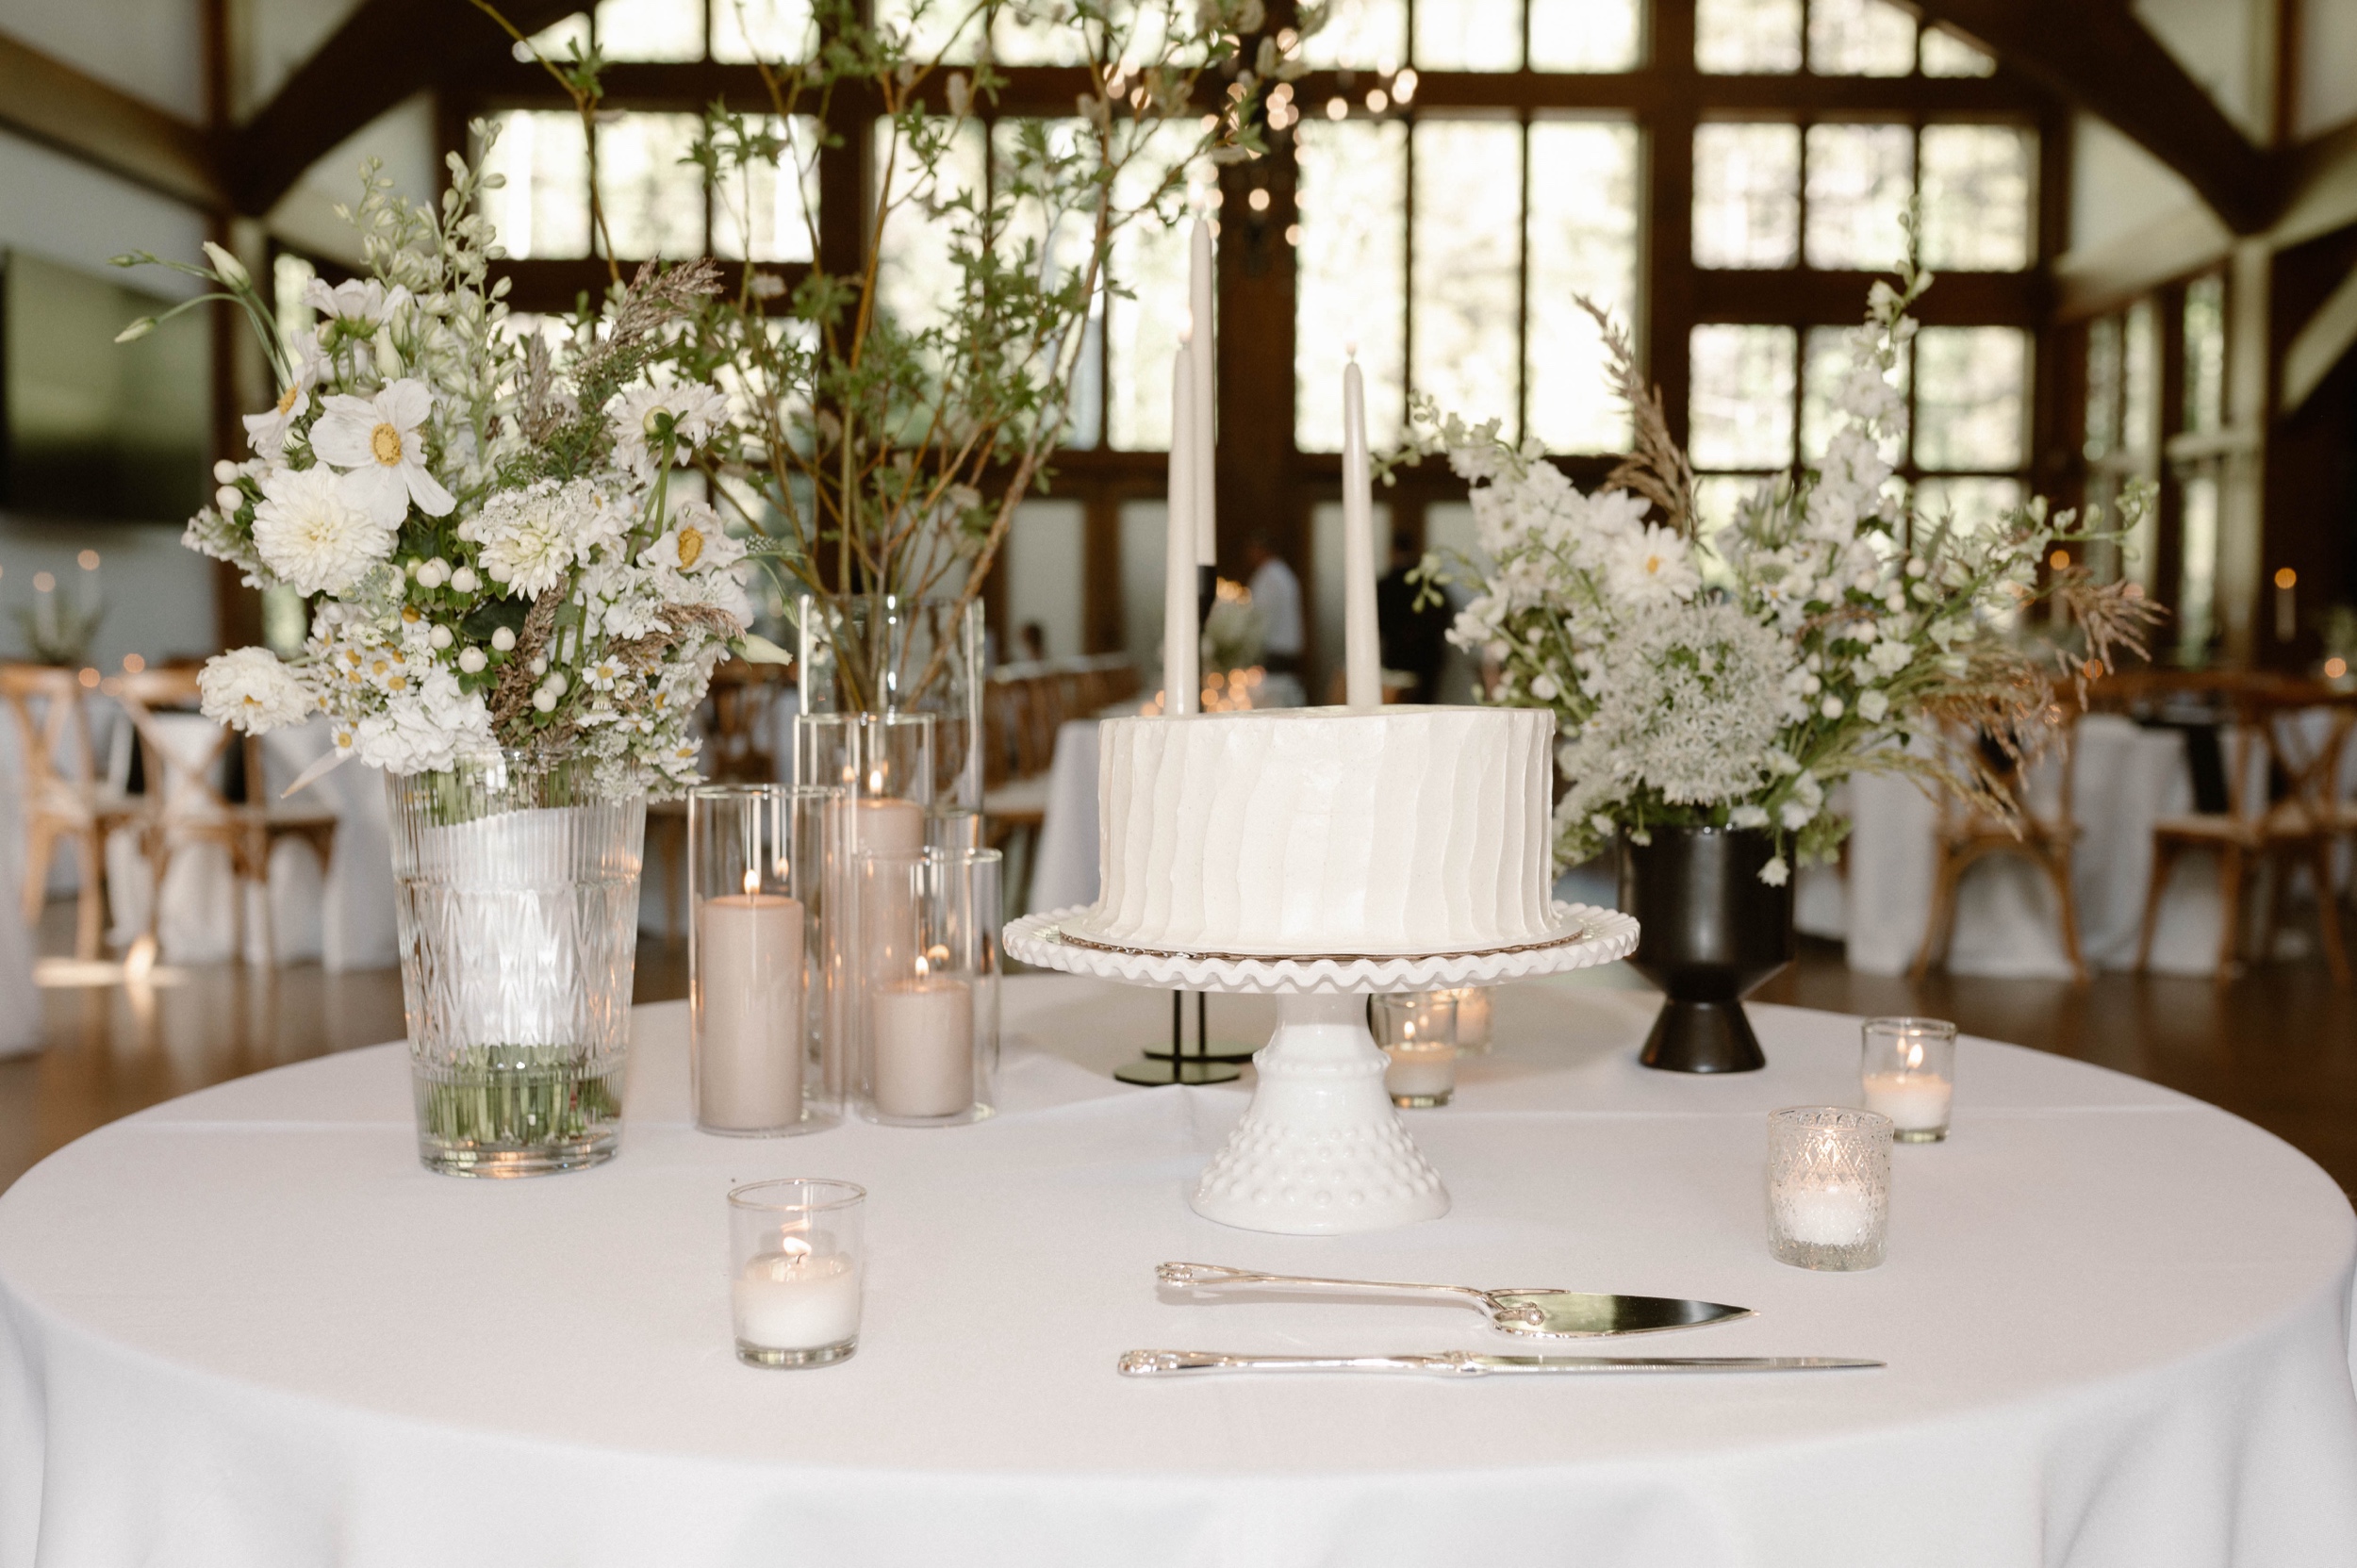 Simple white single tier wedding cake for a wedding in Vail, Colorado. Photo by Colorado wedding photographer Ashley Joyce